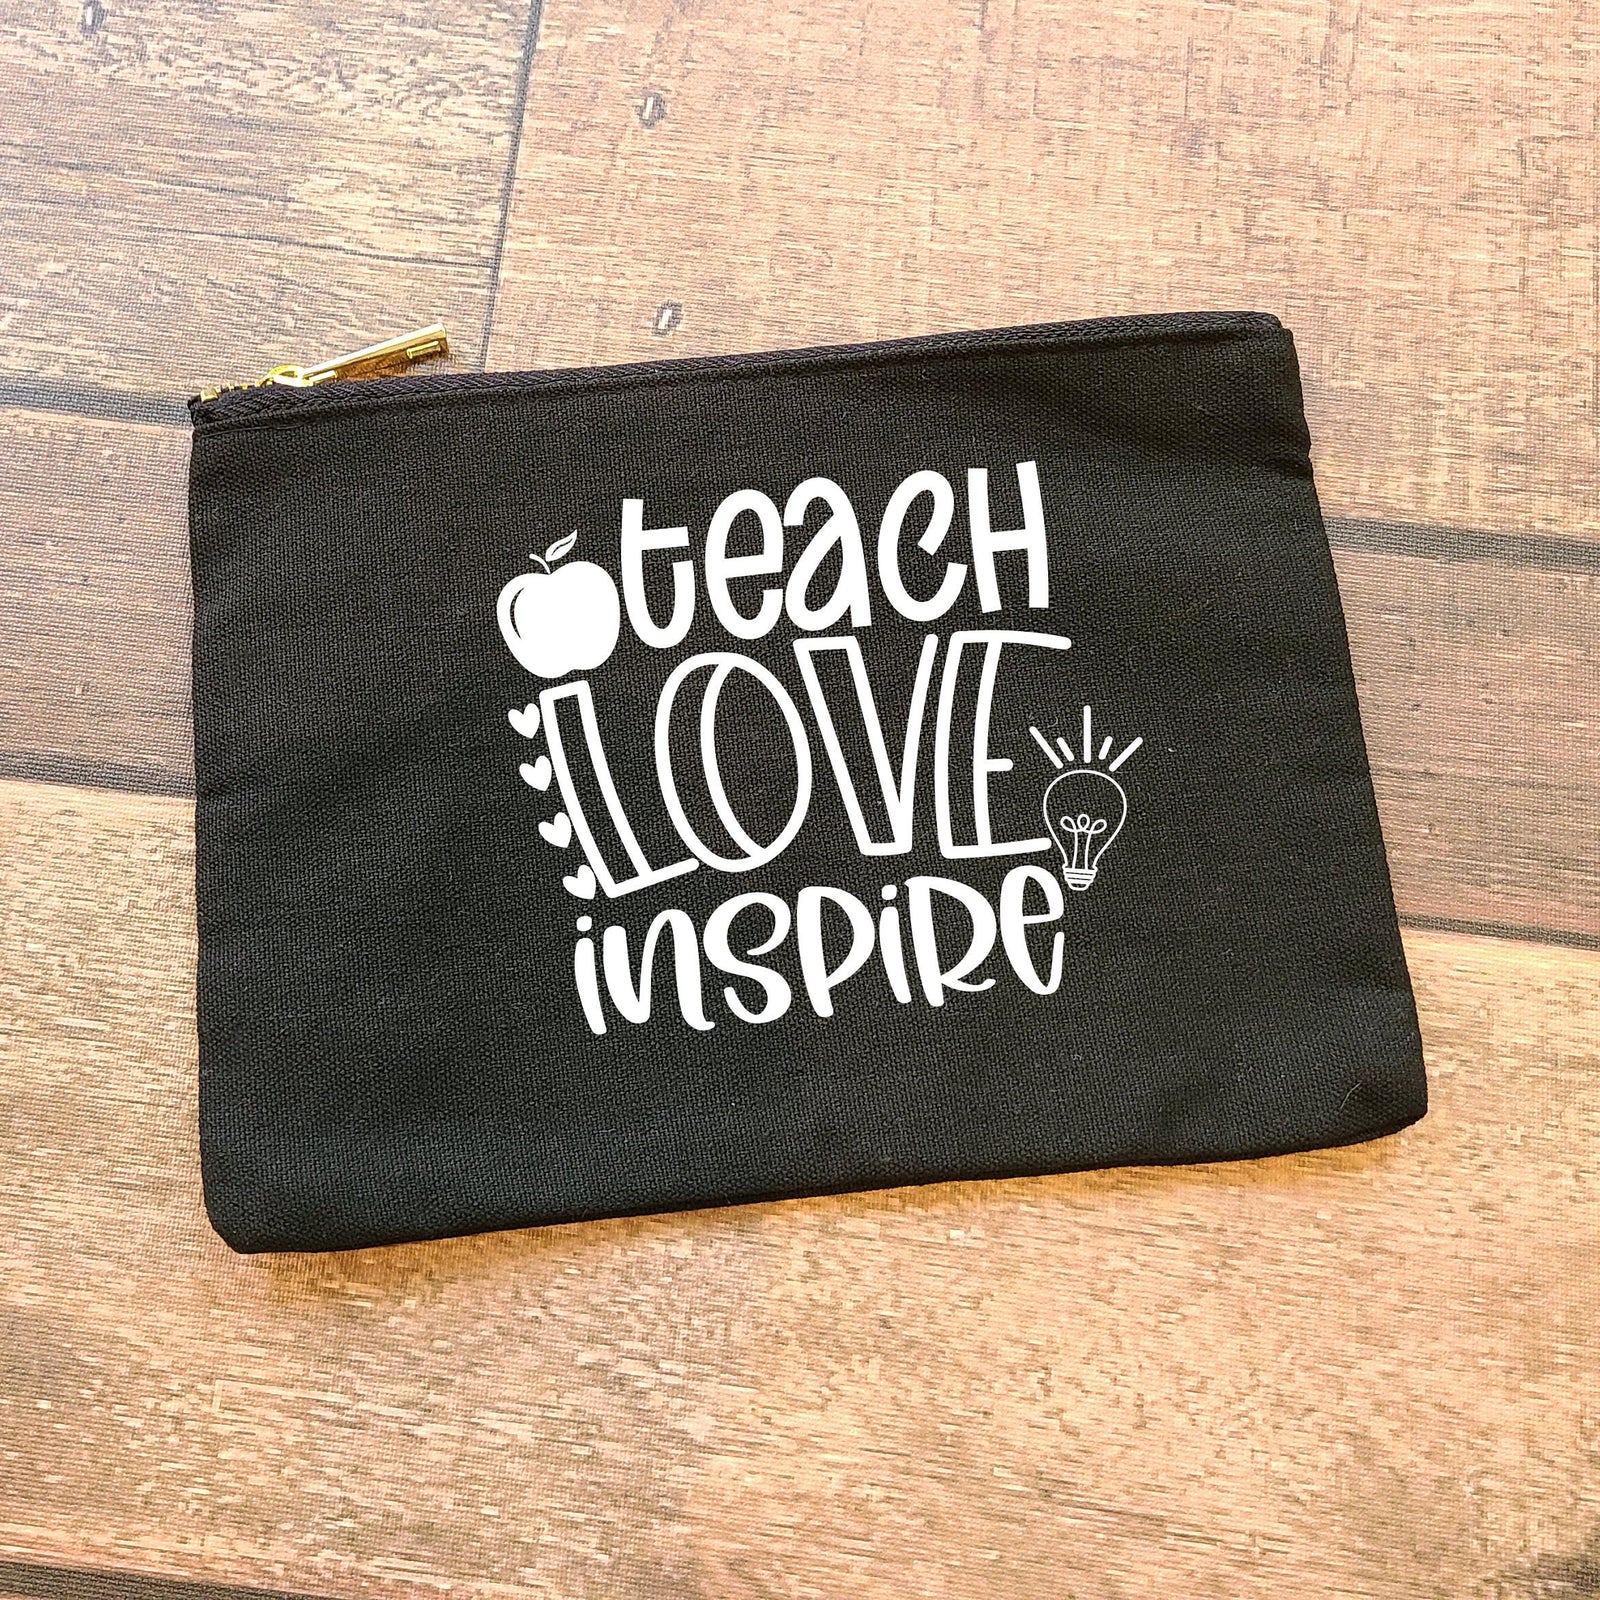 Teacher Pencil Pouch, Makeup Bag, Teacher Gifts Personalized